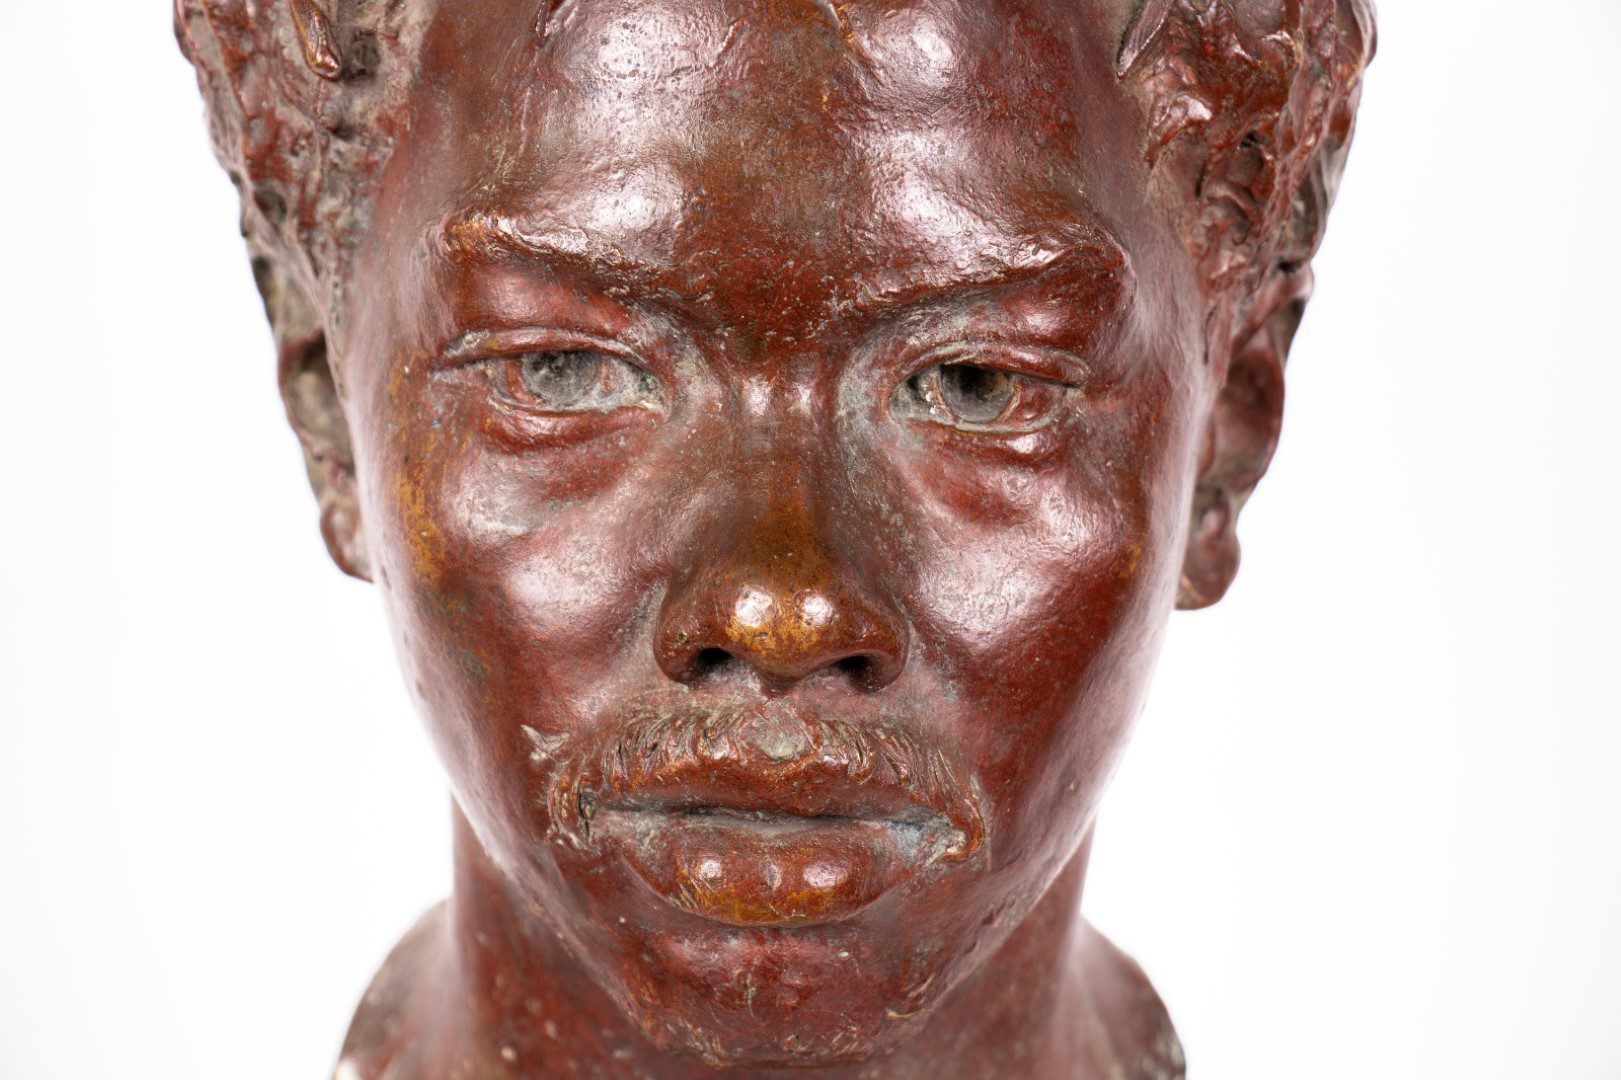 Mariano Benlliure, Bust of Juan Luna y Novicio, Bronze, Mold: 1884, Cast: c. 1920